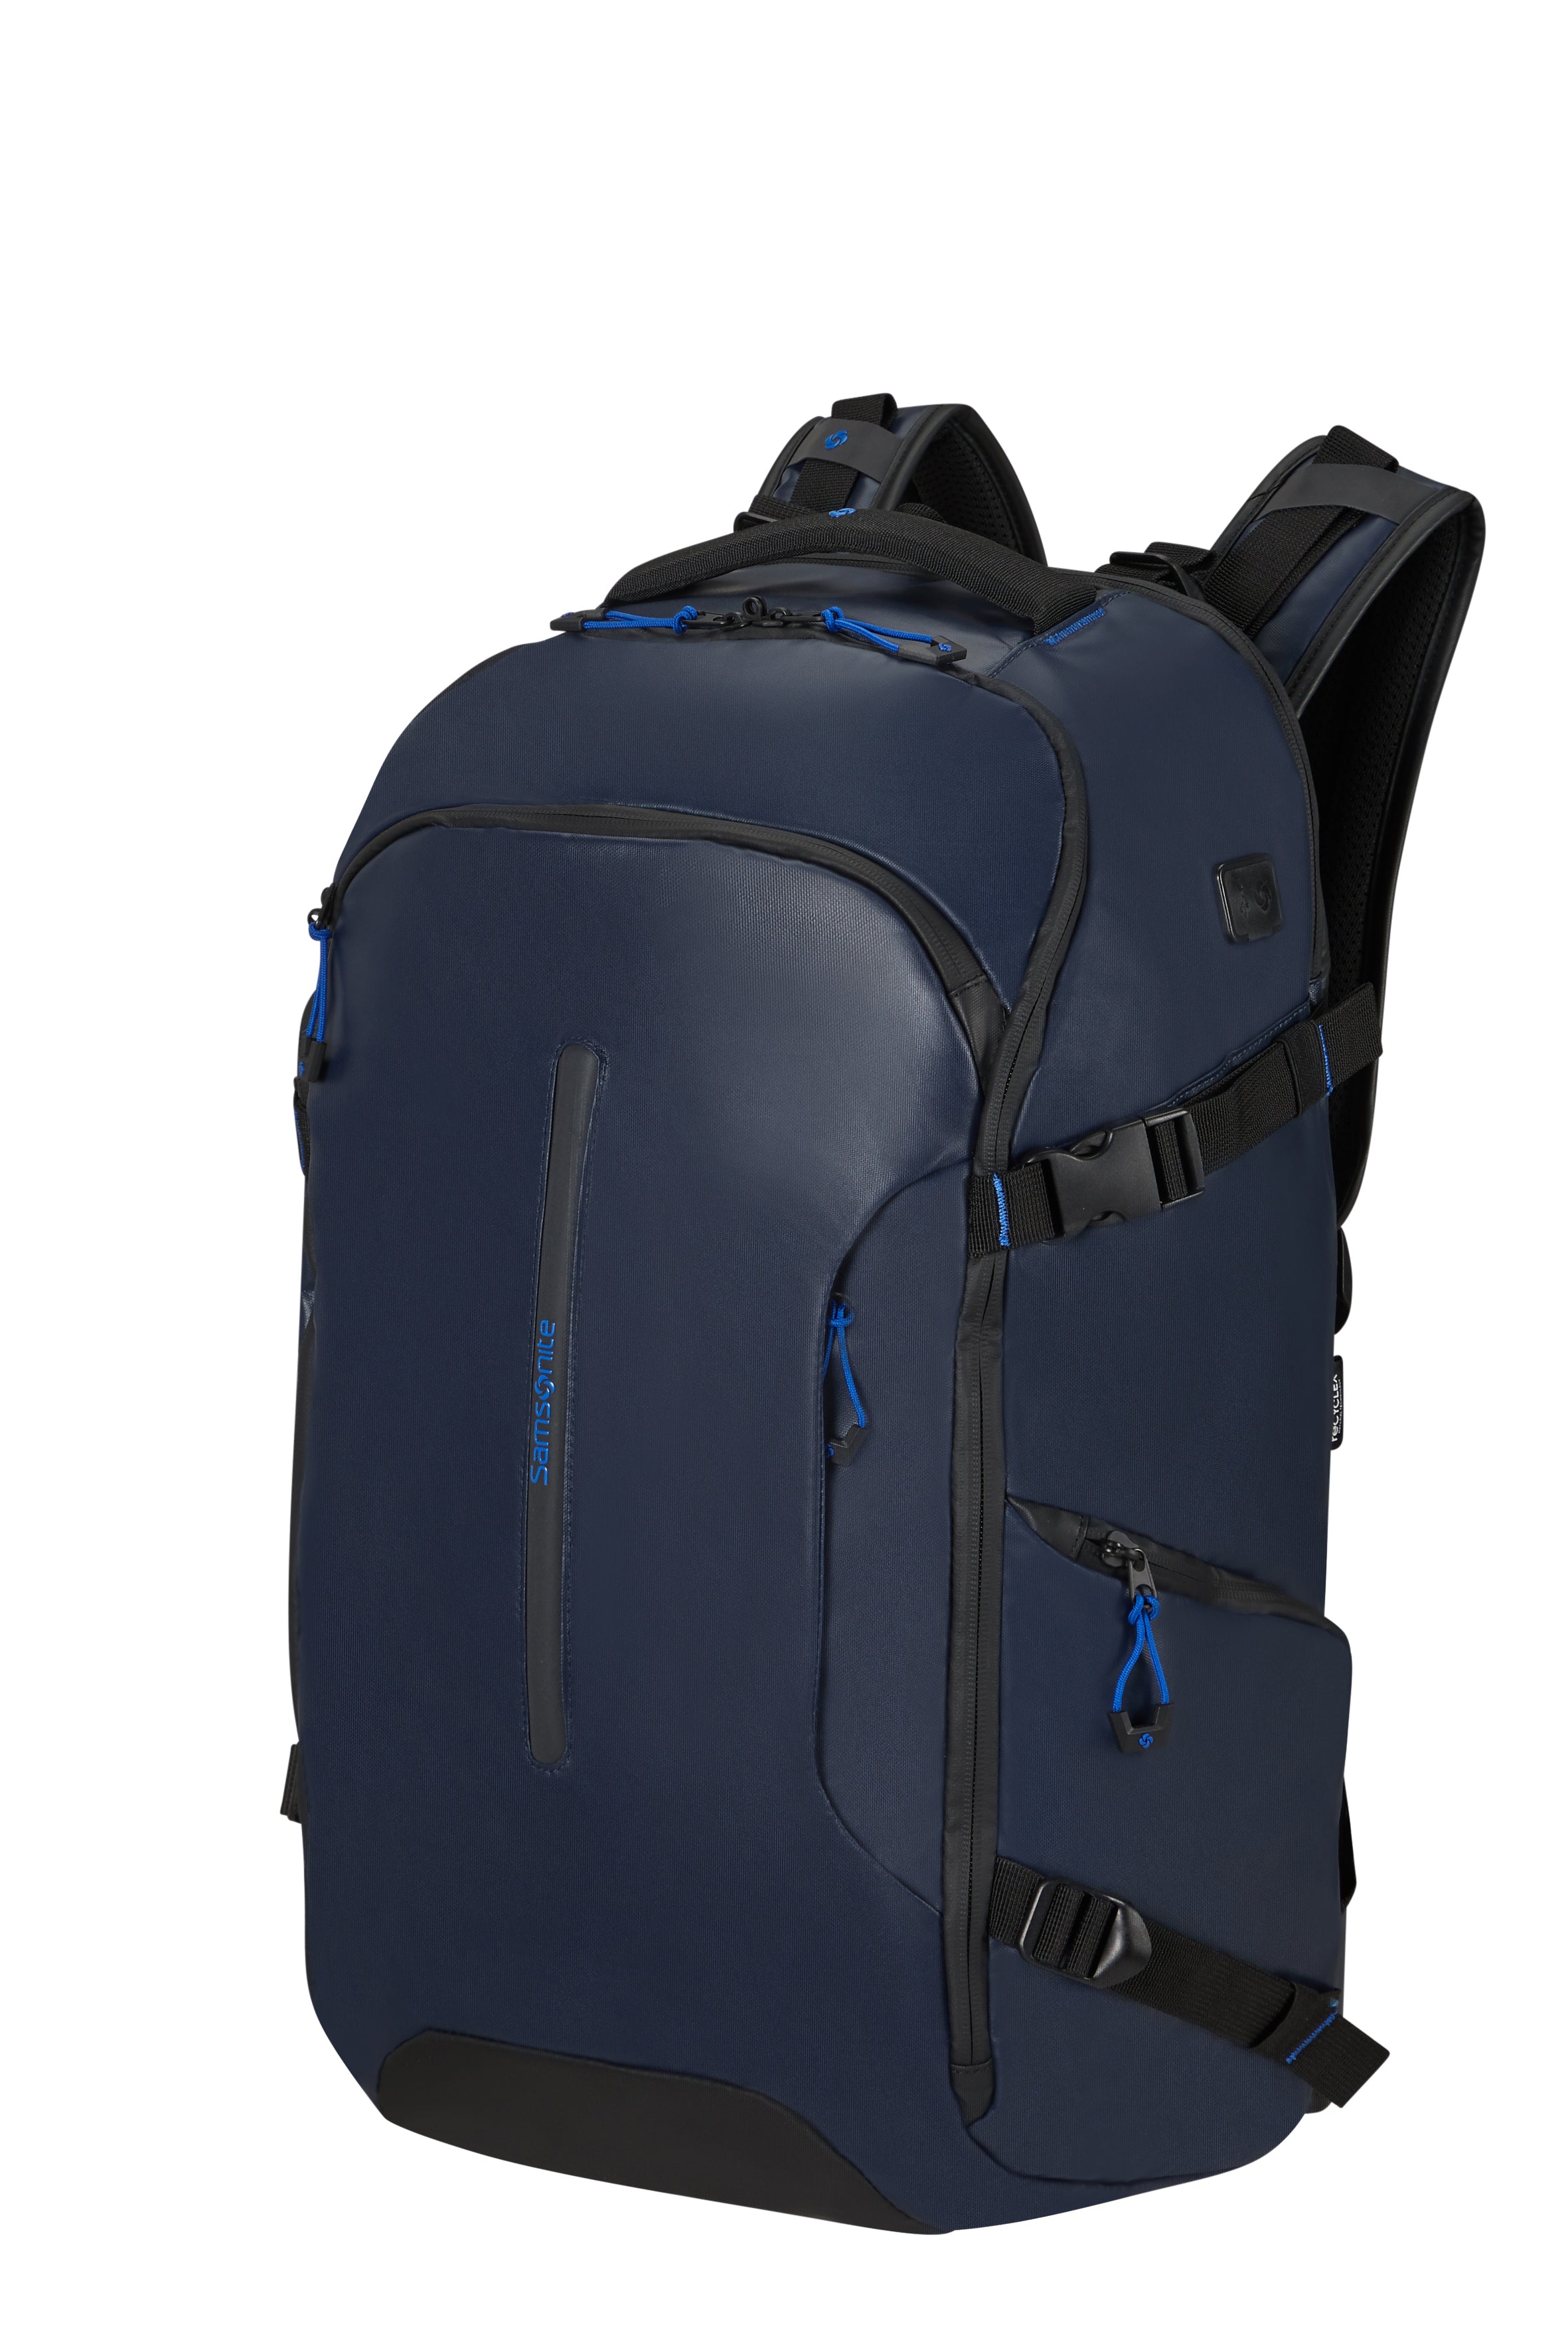 Samsonite Ecodiver Travel Backpack Small